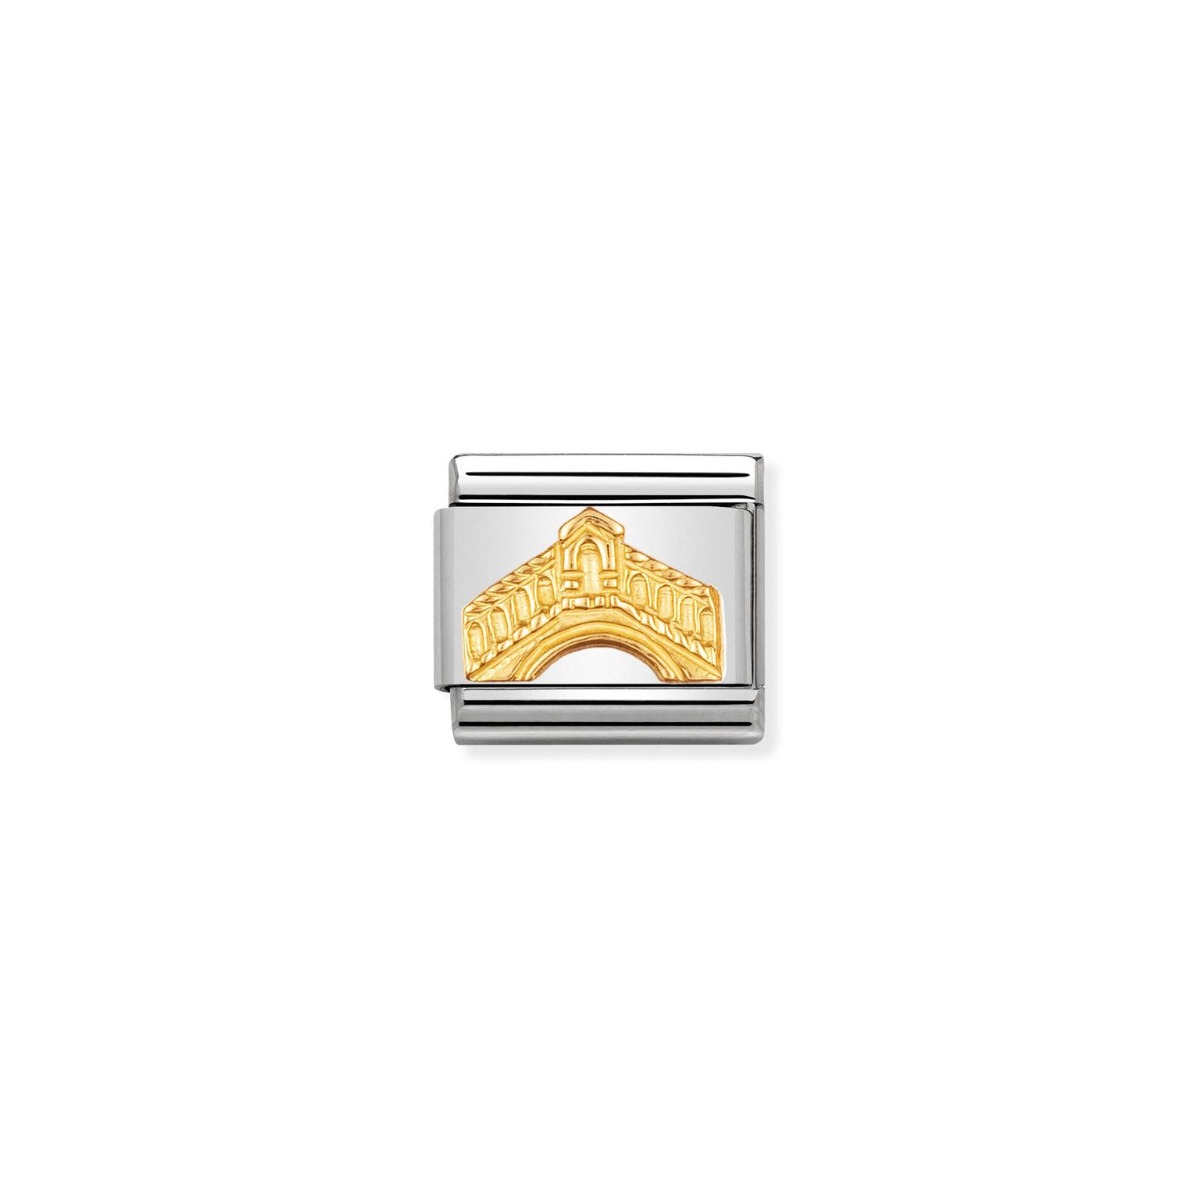 Nomination Classic Monuments Rialto Bridge Charm - 18k Gold - 030123/26